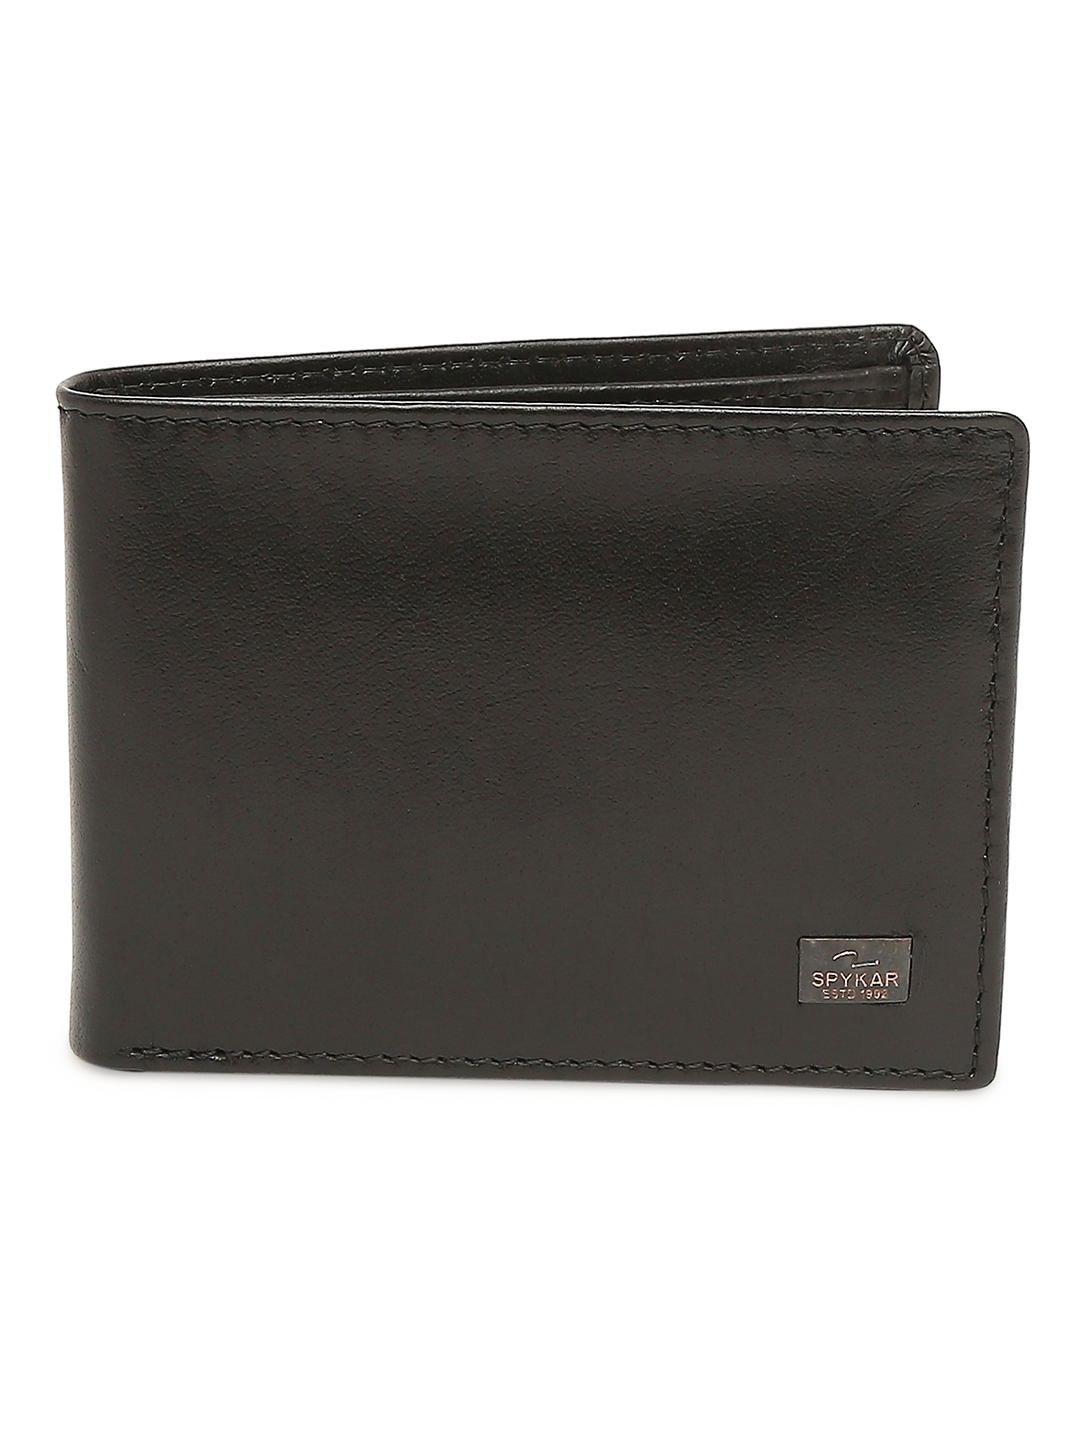 Spykar | Spykar Black Leather Wallet